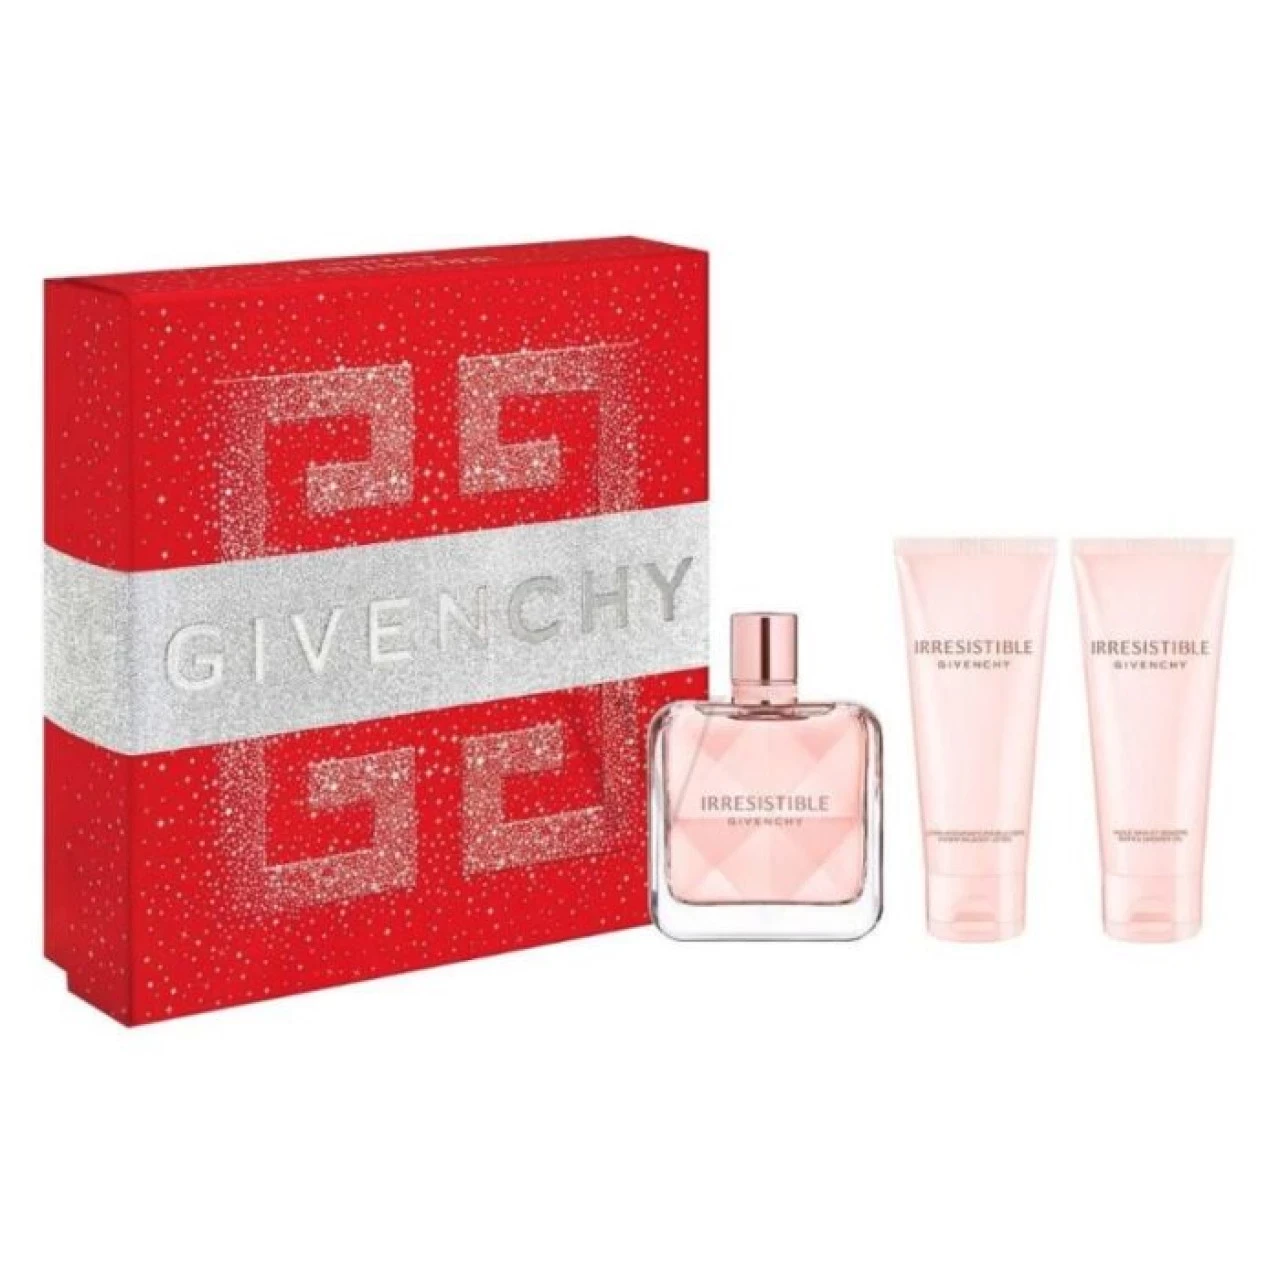 Givenchy Irresistible Eau Parfum 80ml Aceite De Ducha 75ml Locion Corporal 75ml